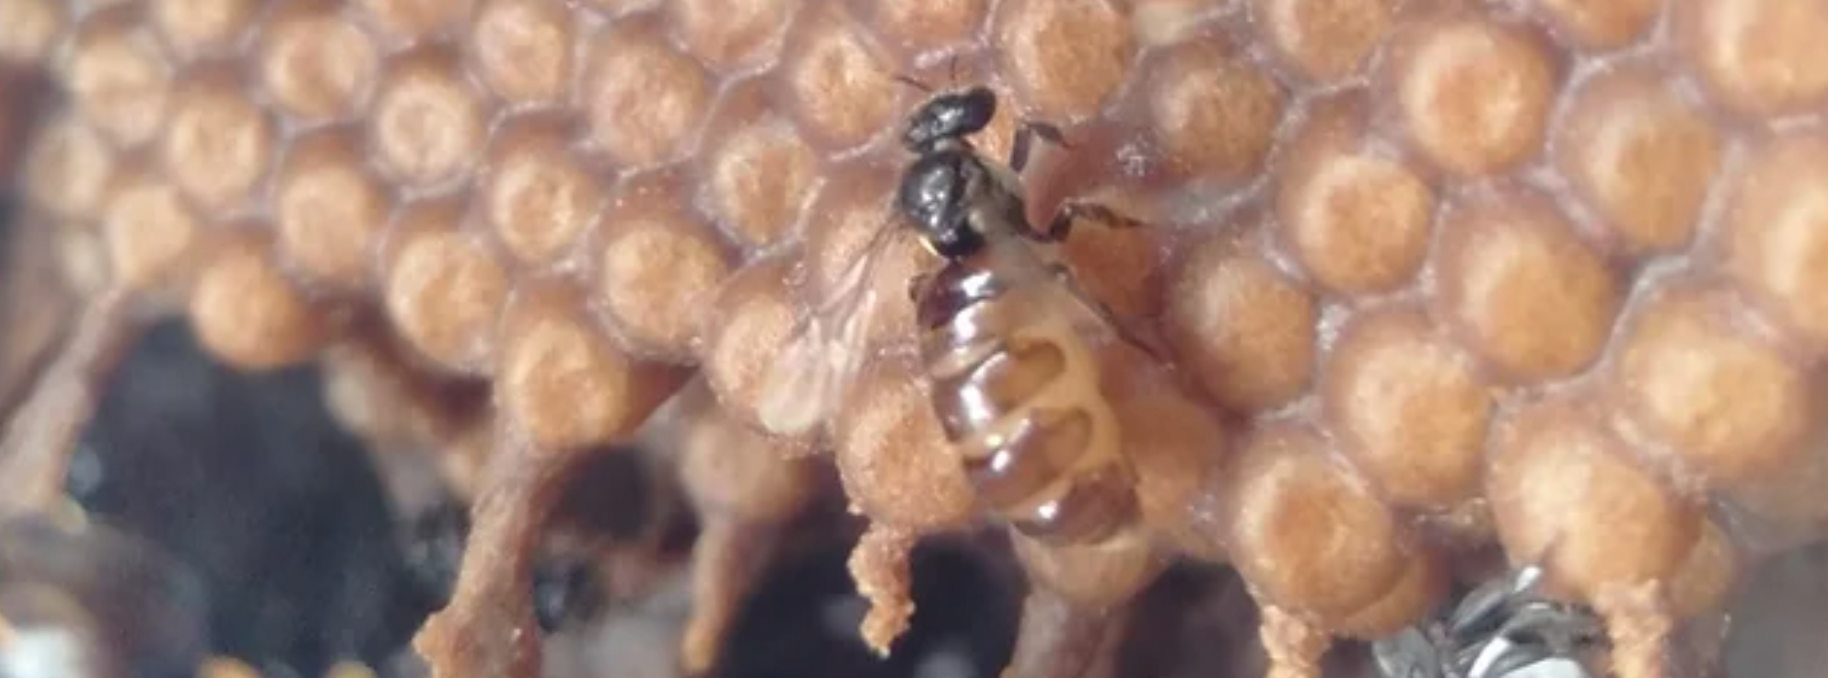 Native bee queen stingless bee Australia